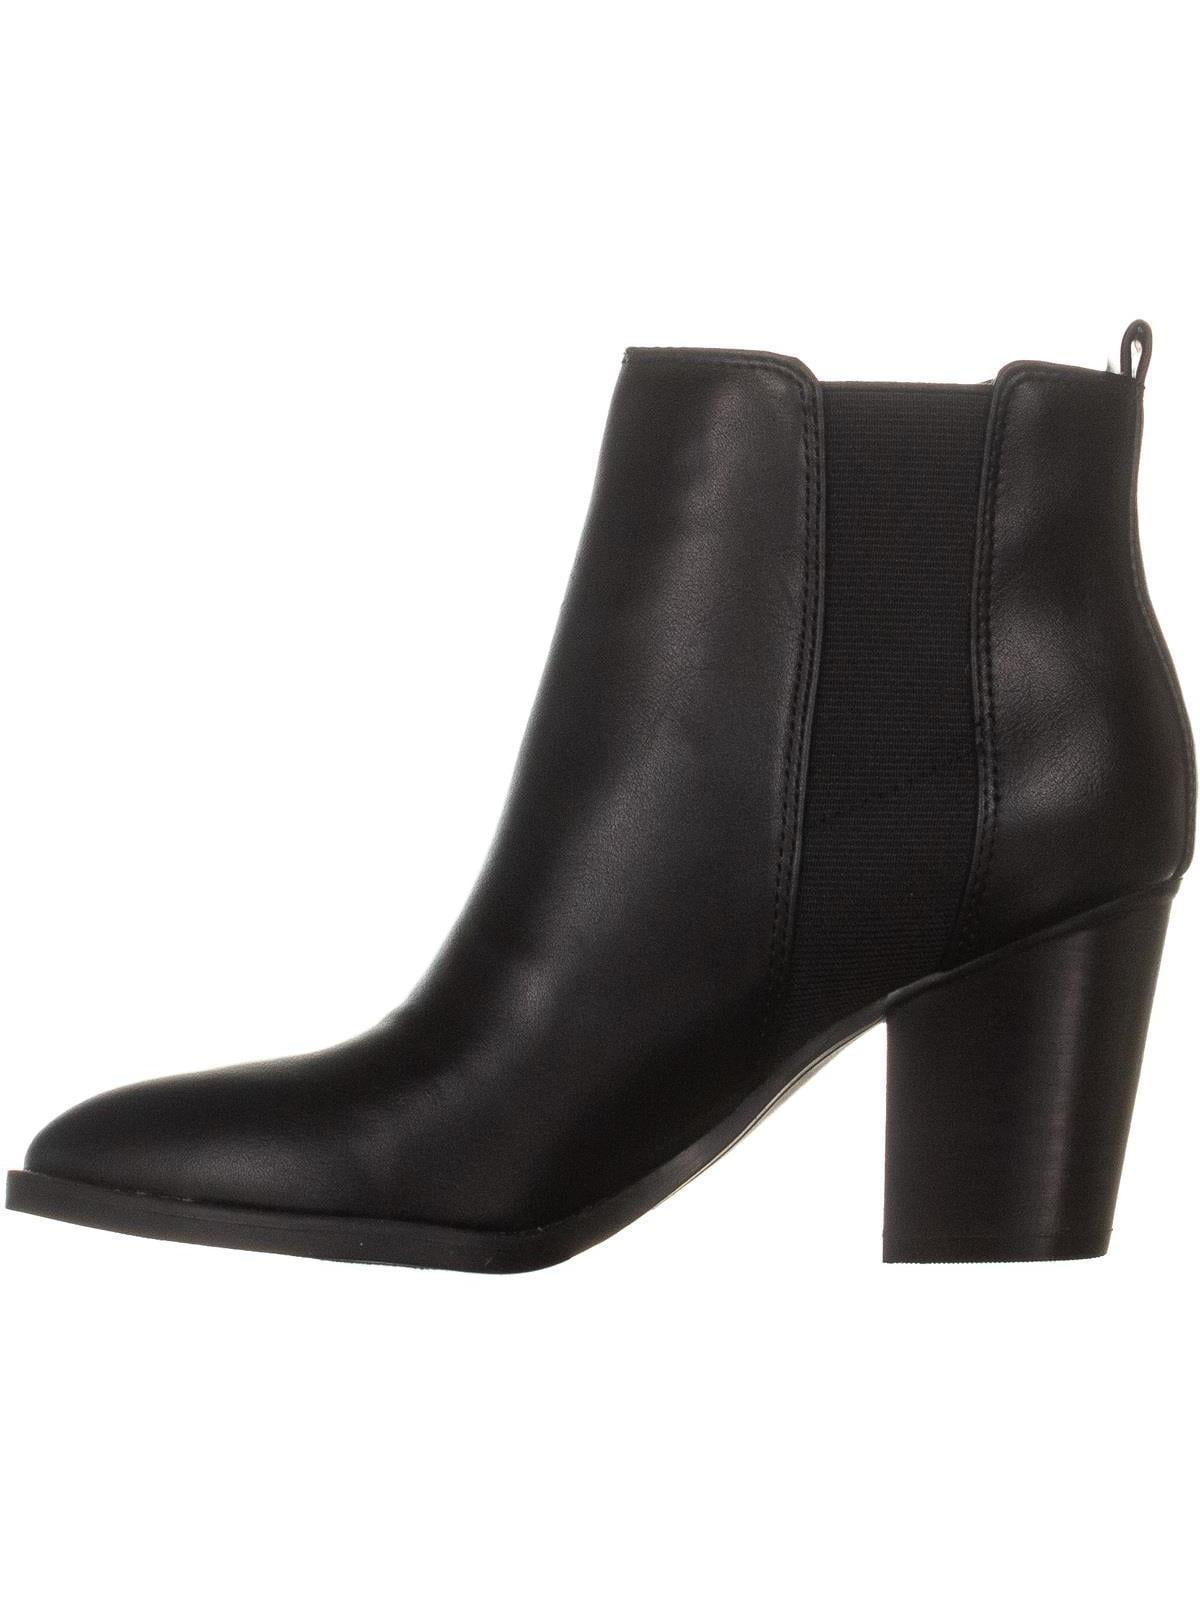 Womens Hilfiger Regise On Boots, Black, 5.5 US - Walmart.com